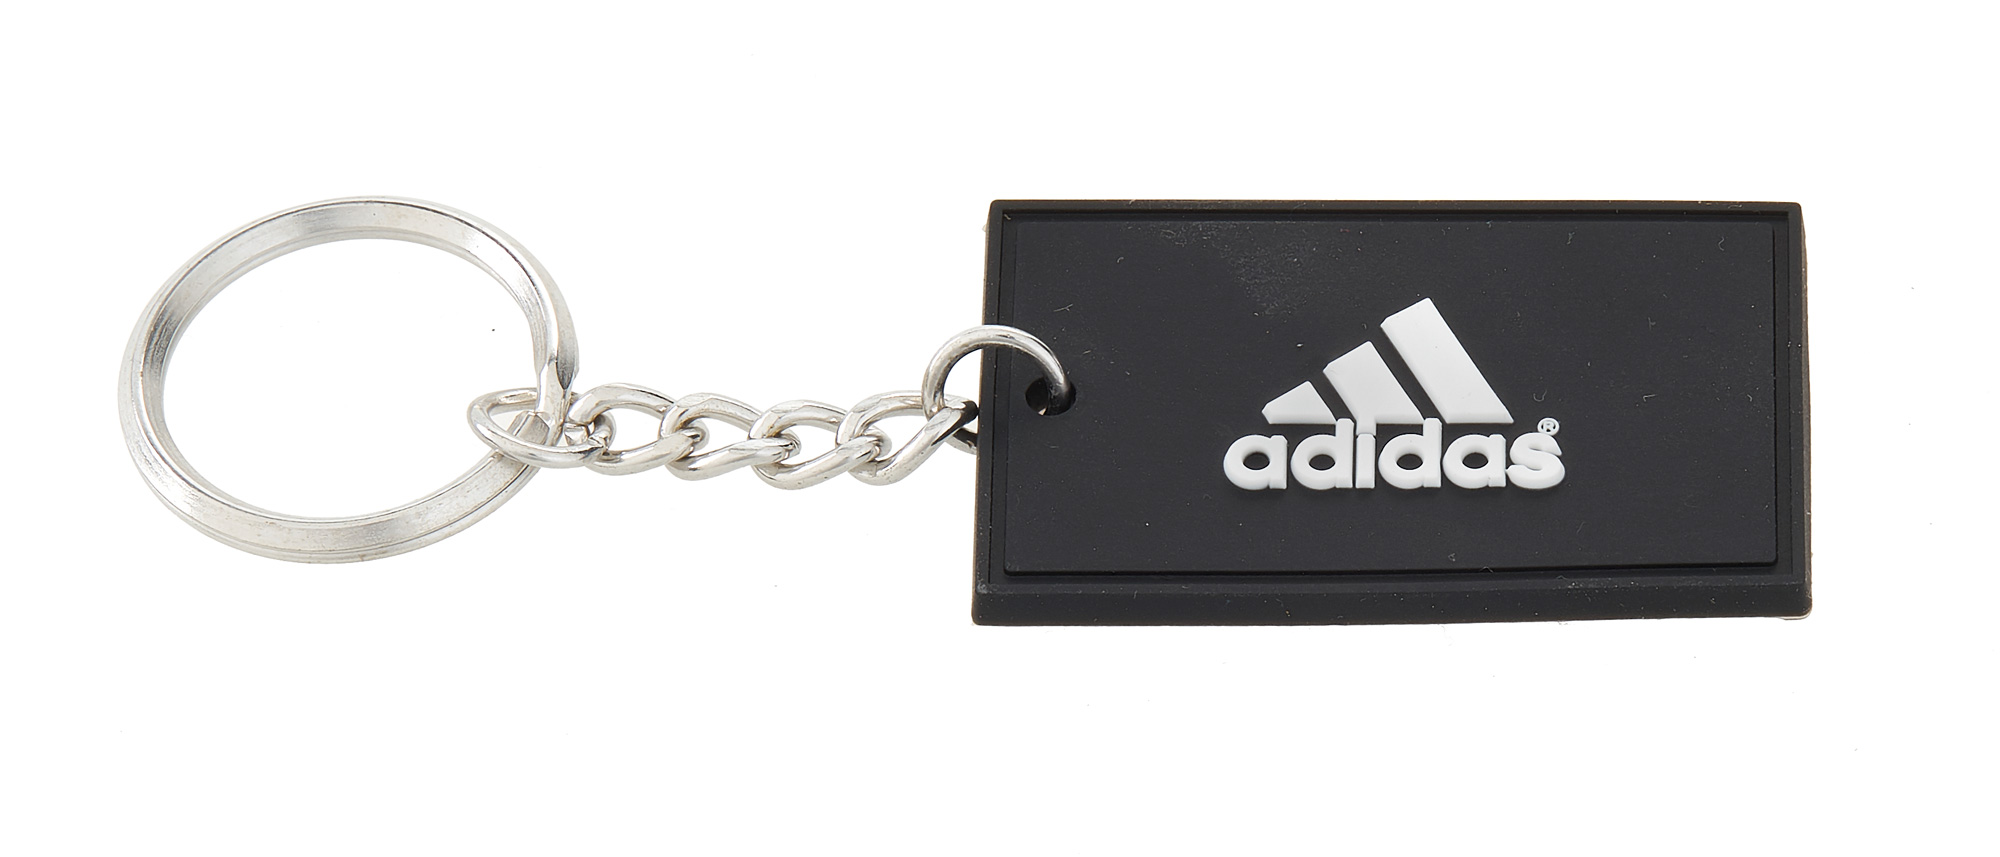 adidas key ring